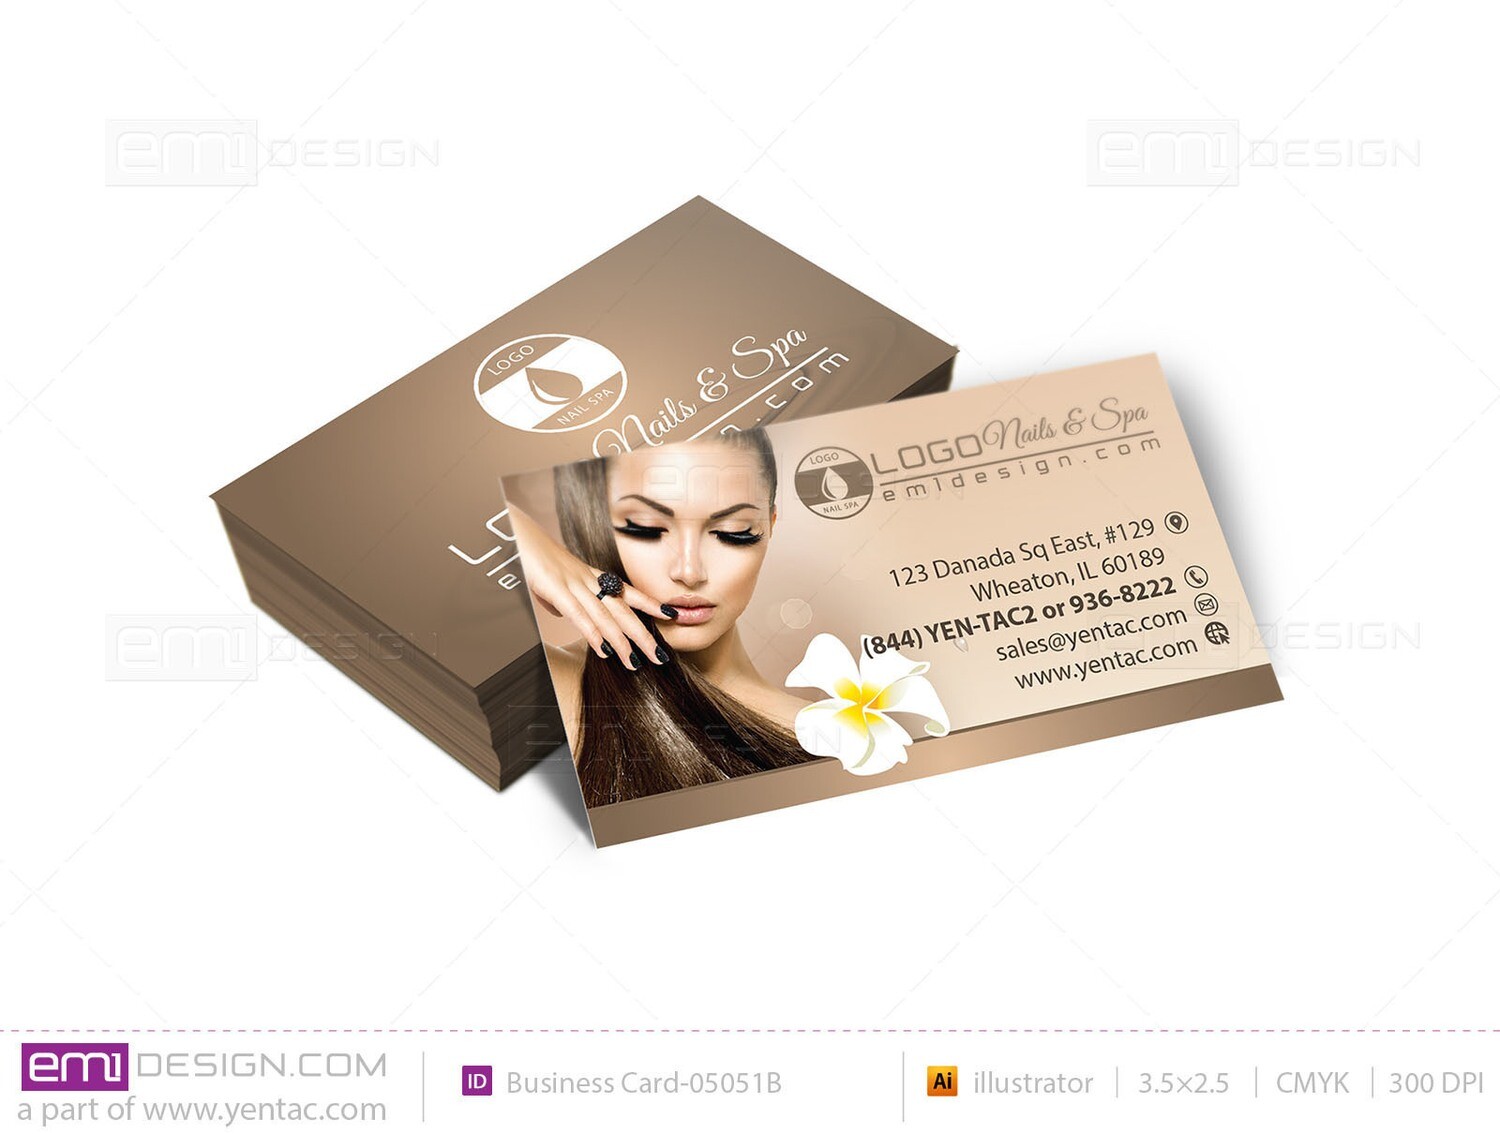 Business Card - Template buscard-05051B